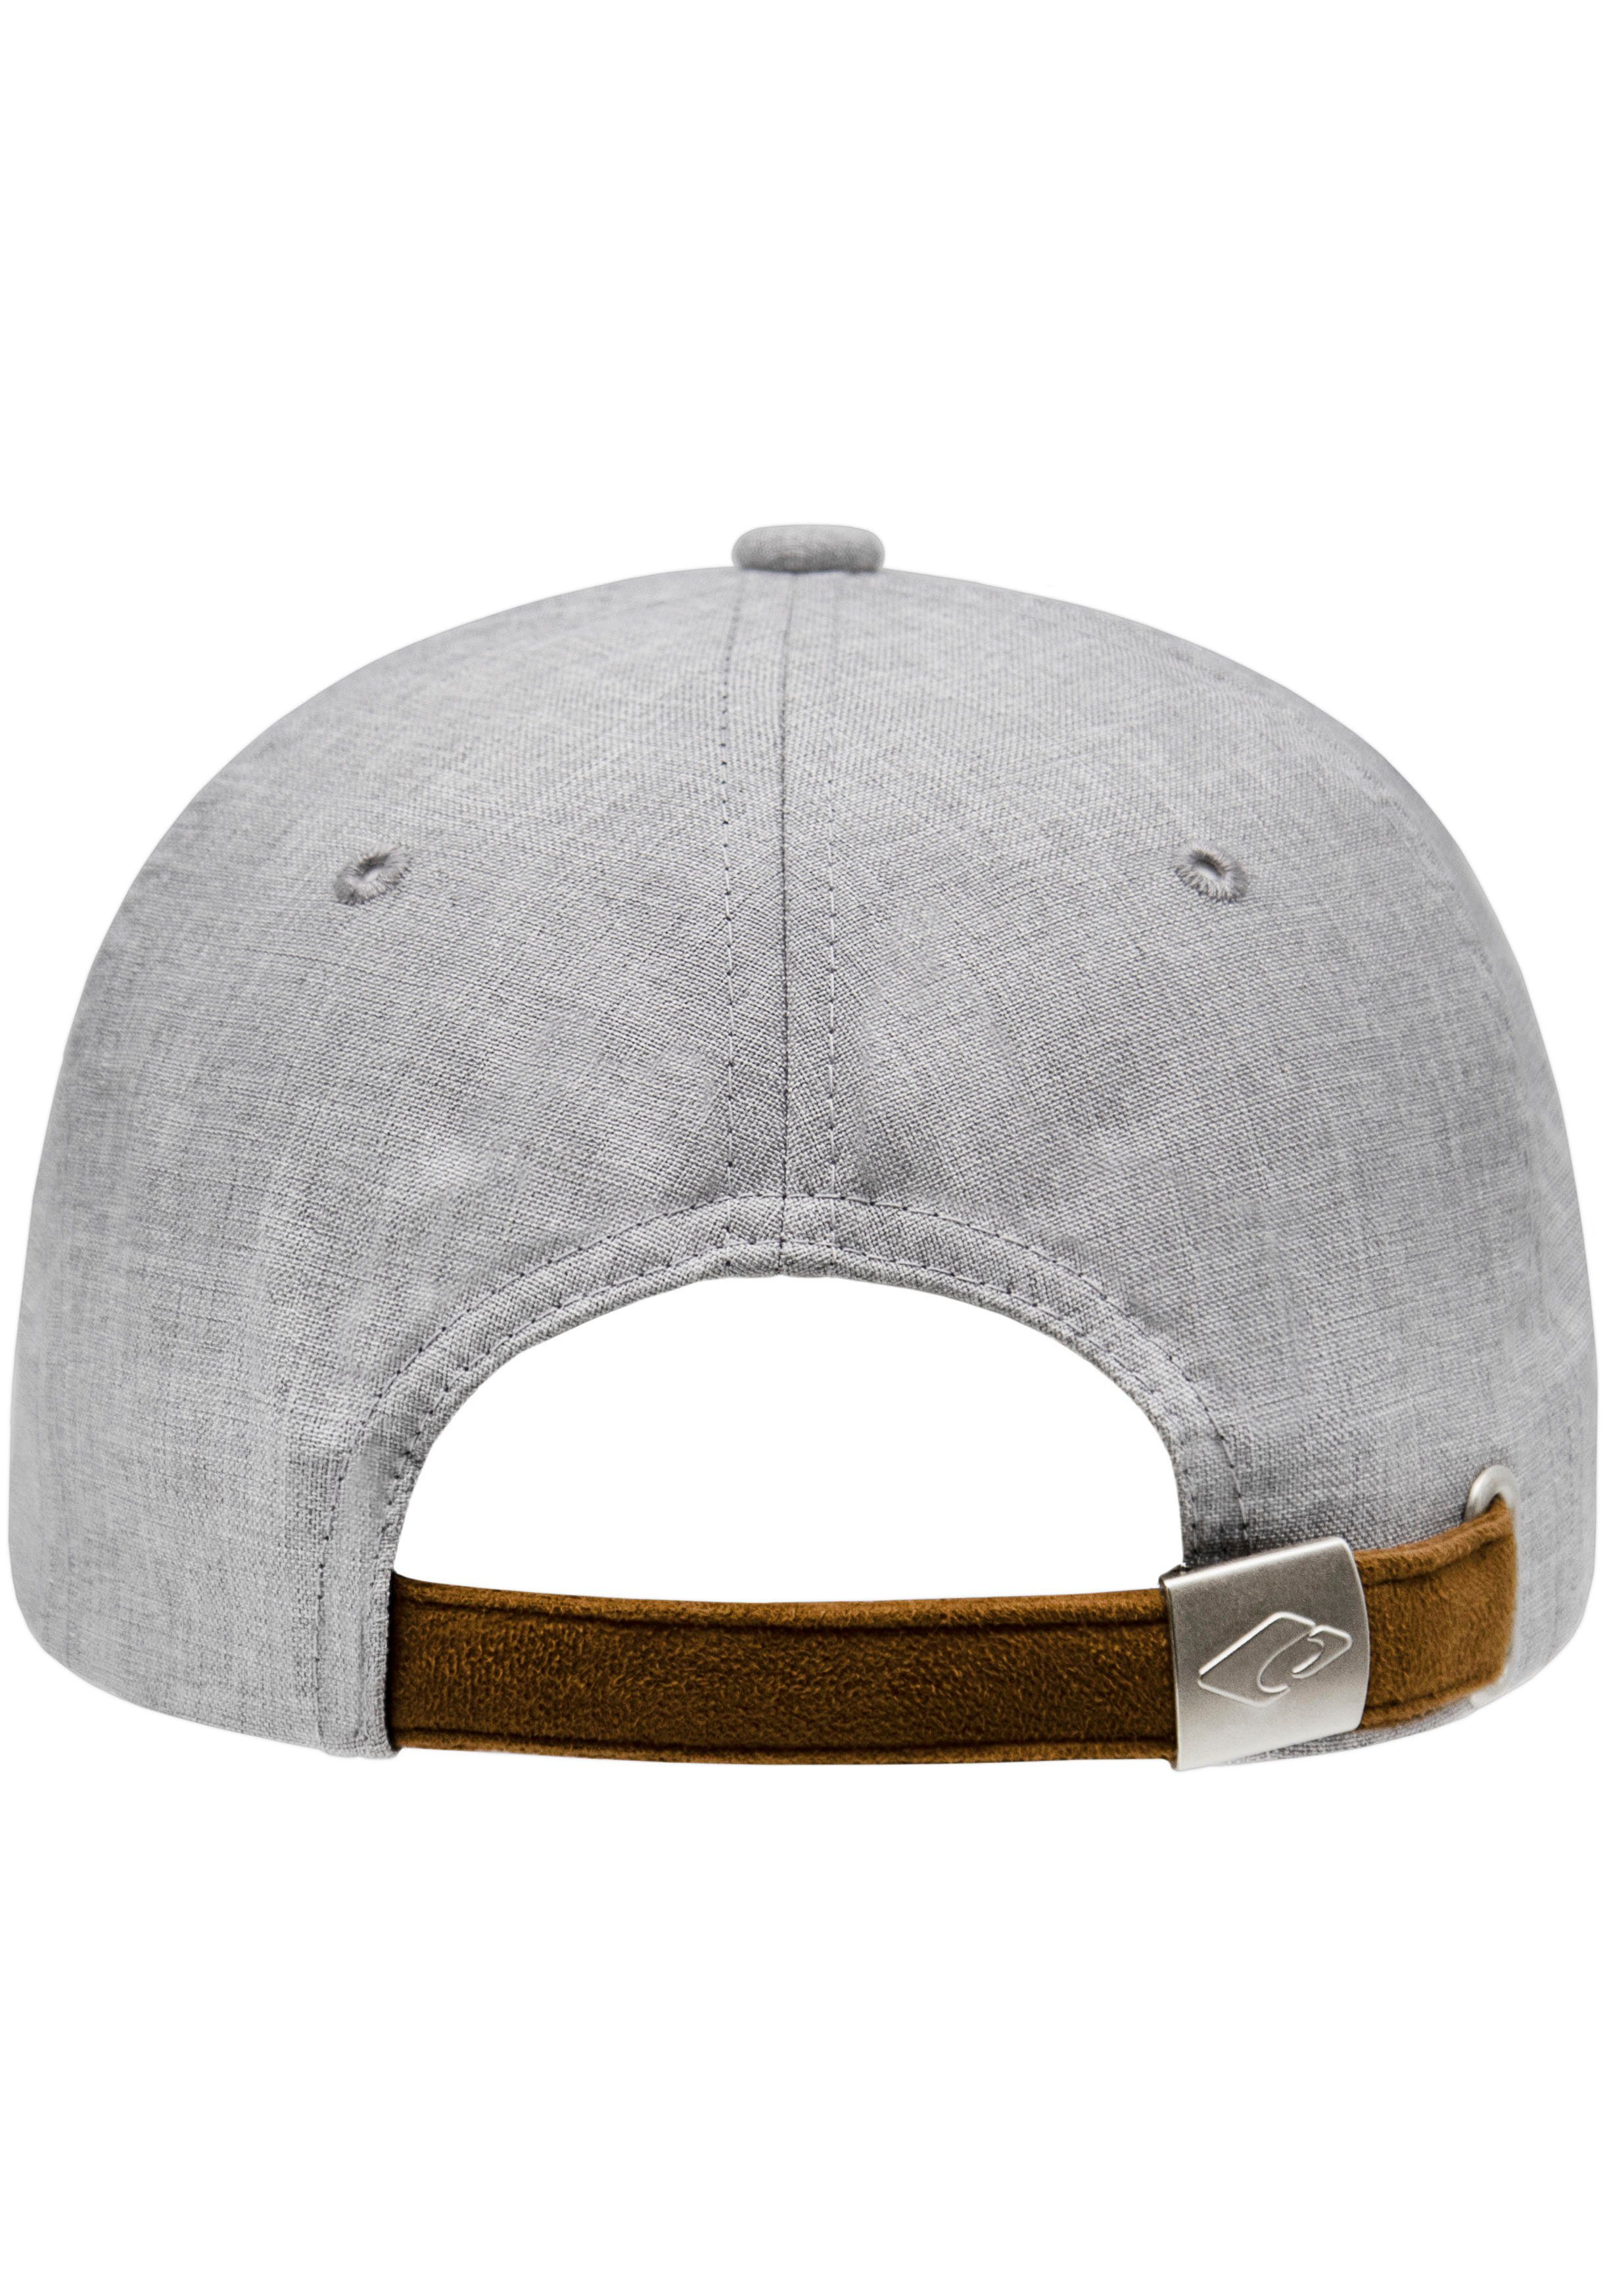 chillouts Baseball Cap Amadora verstellbar in hellgrau Optik, Size, One melierter Hat